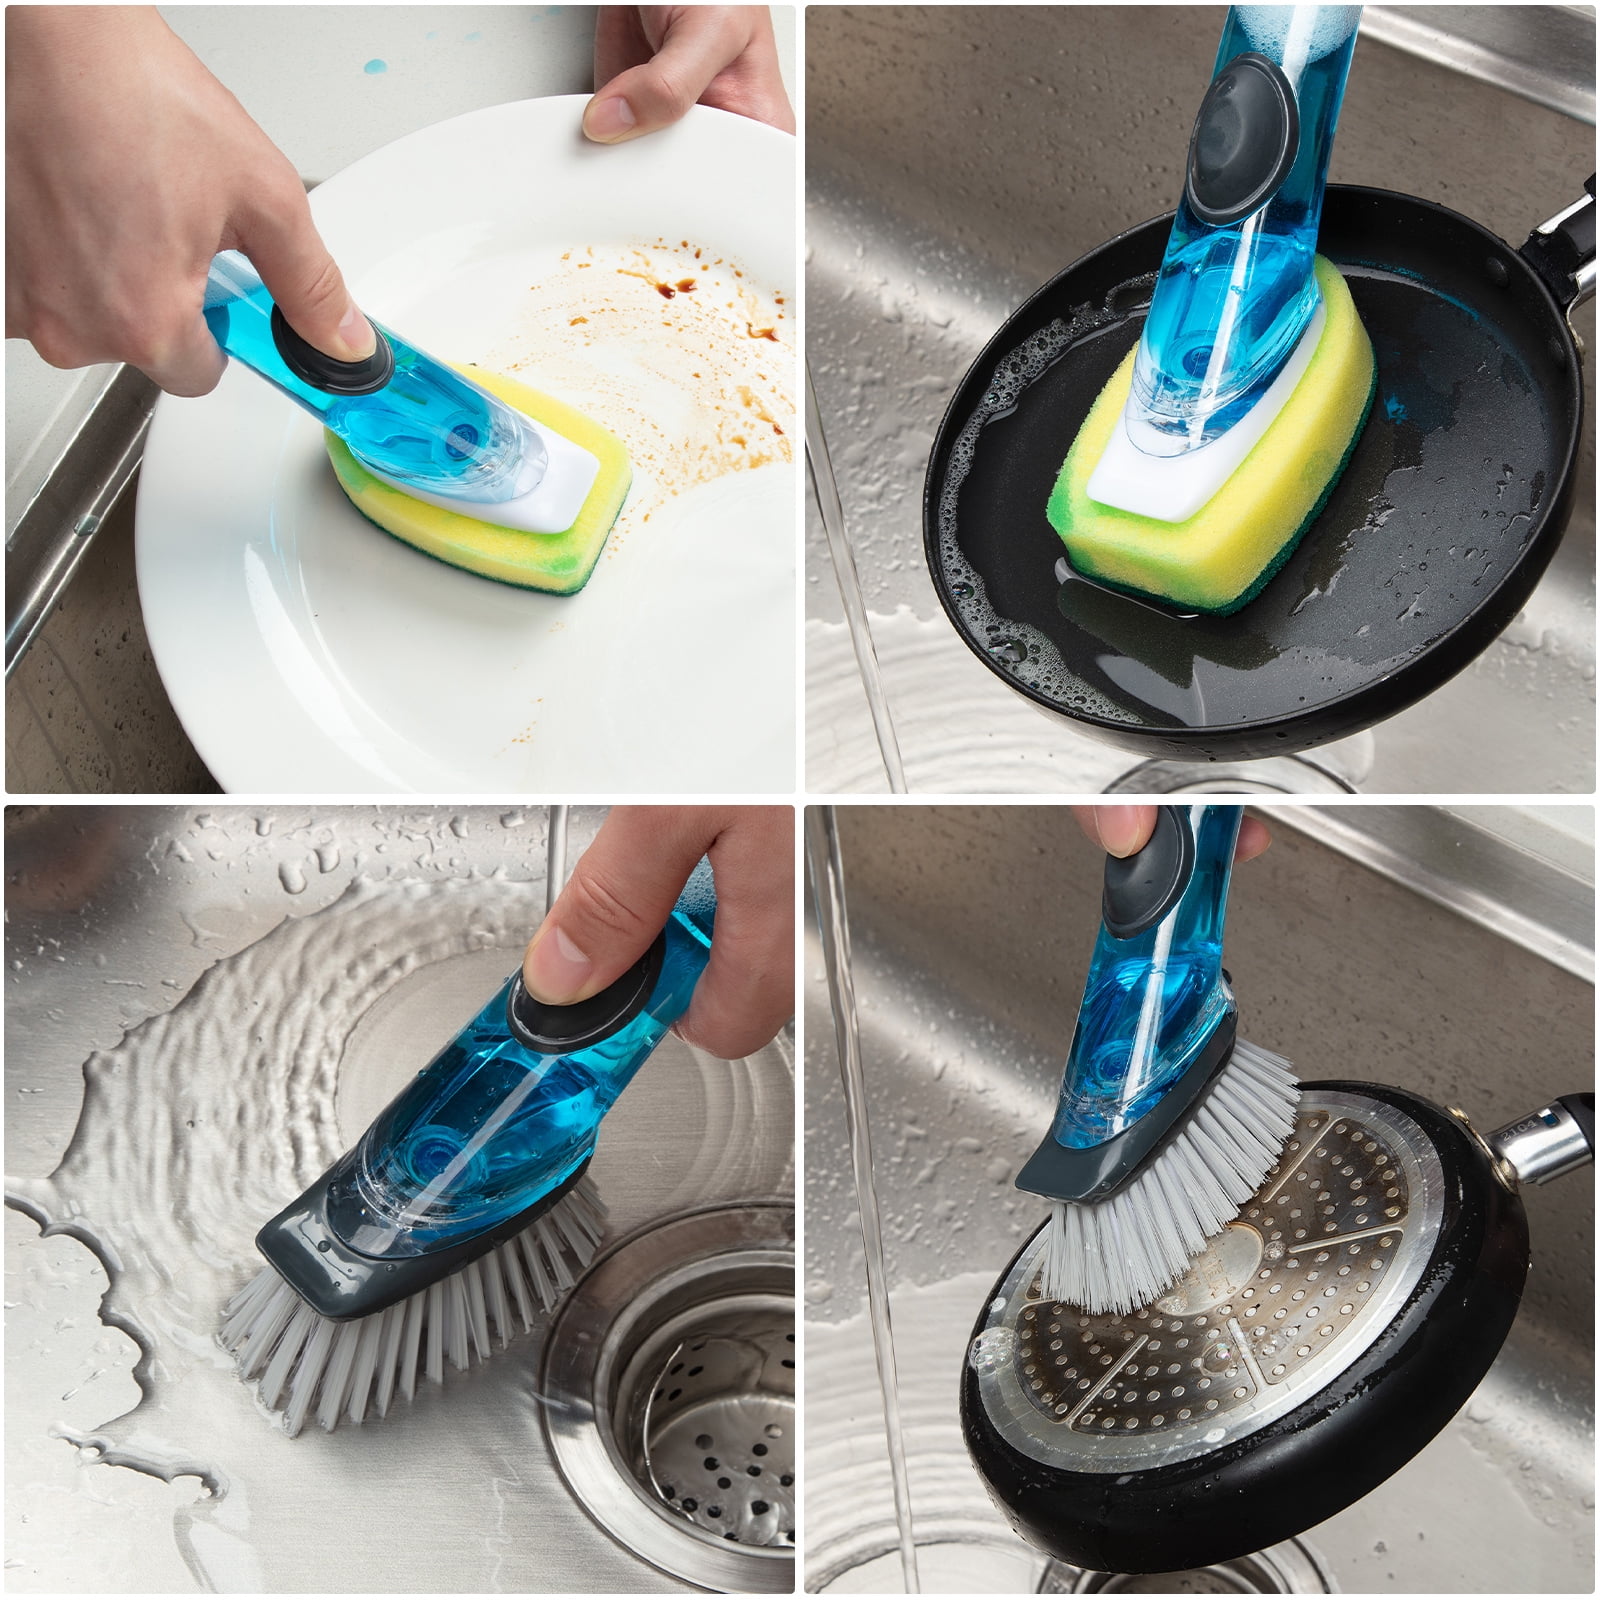 QUTHZZHY dish cleaning brush, soap dispensing dish brush set